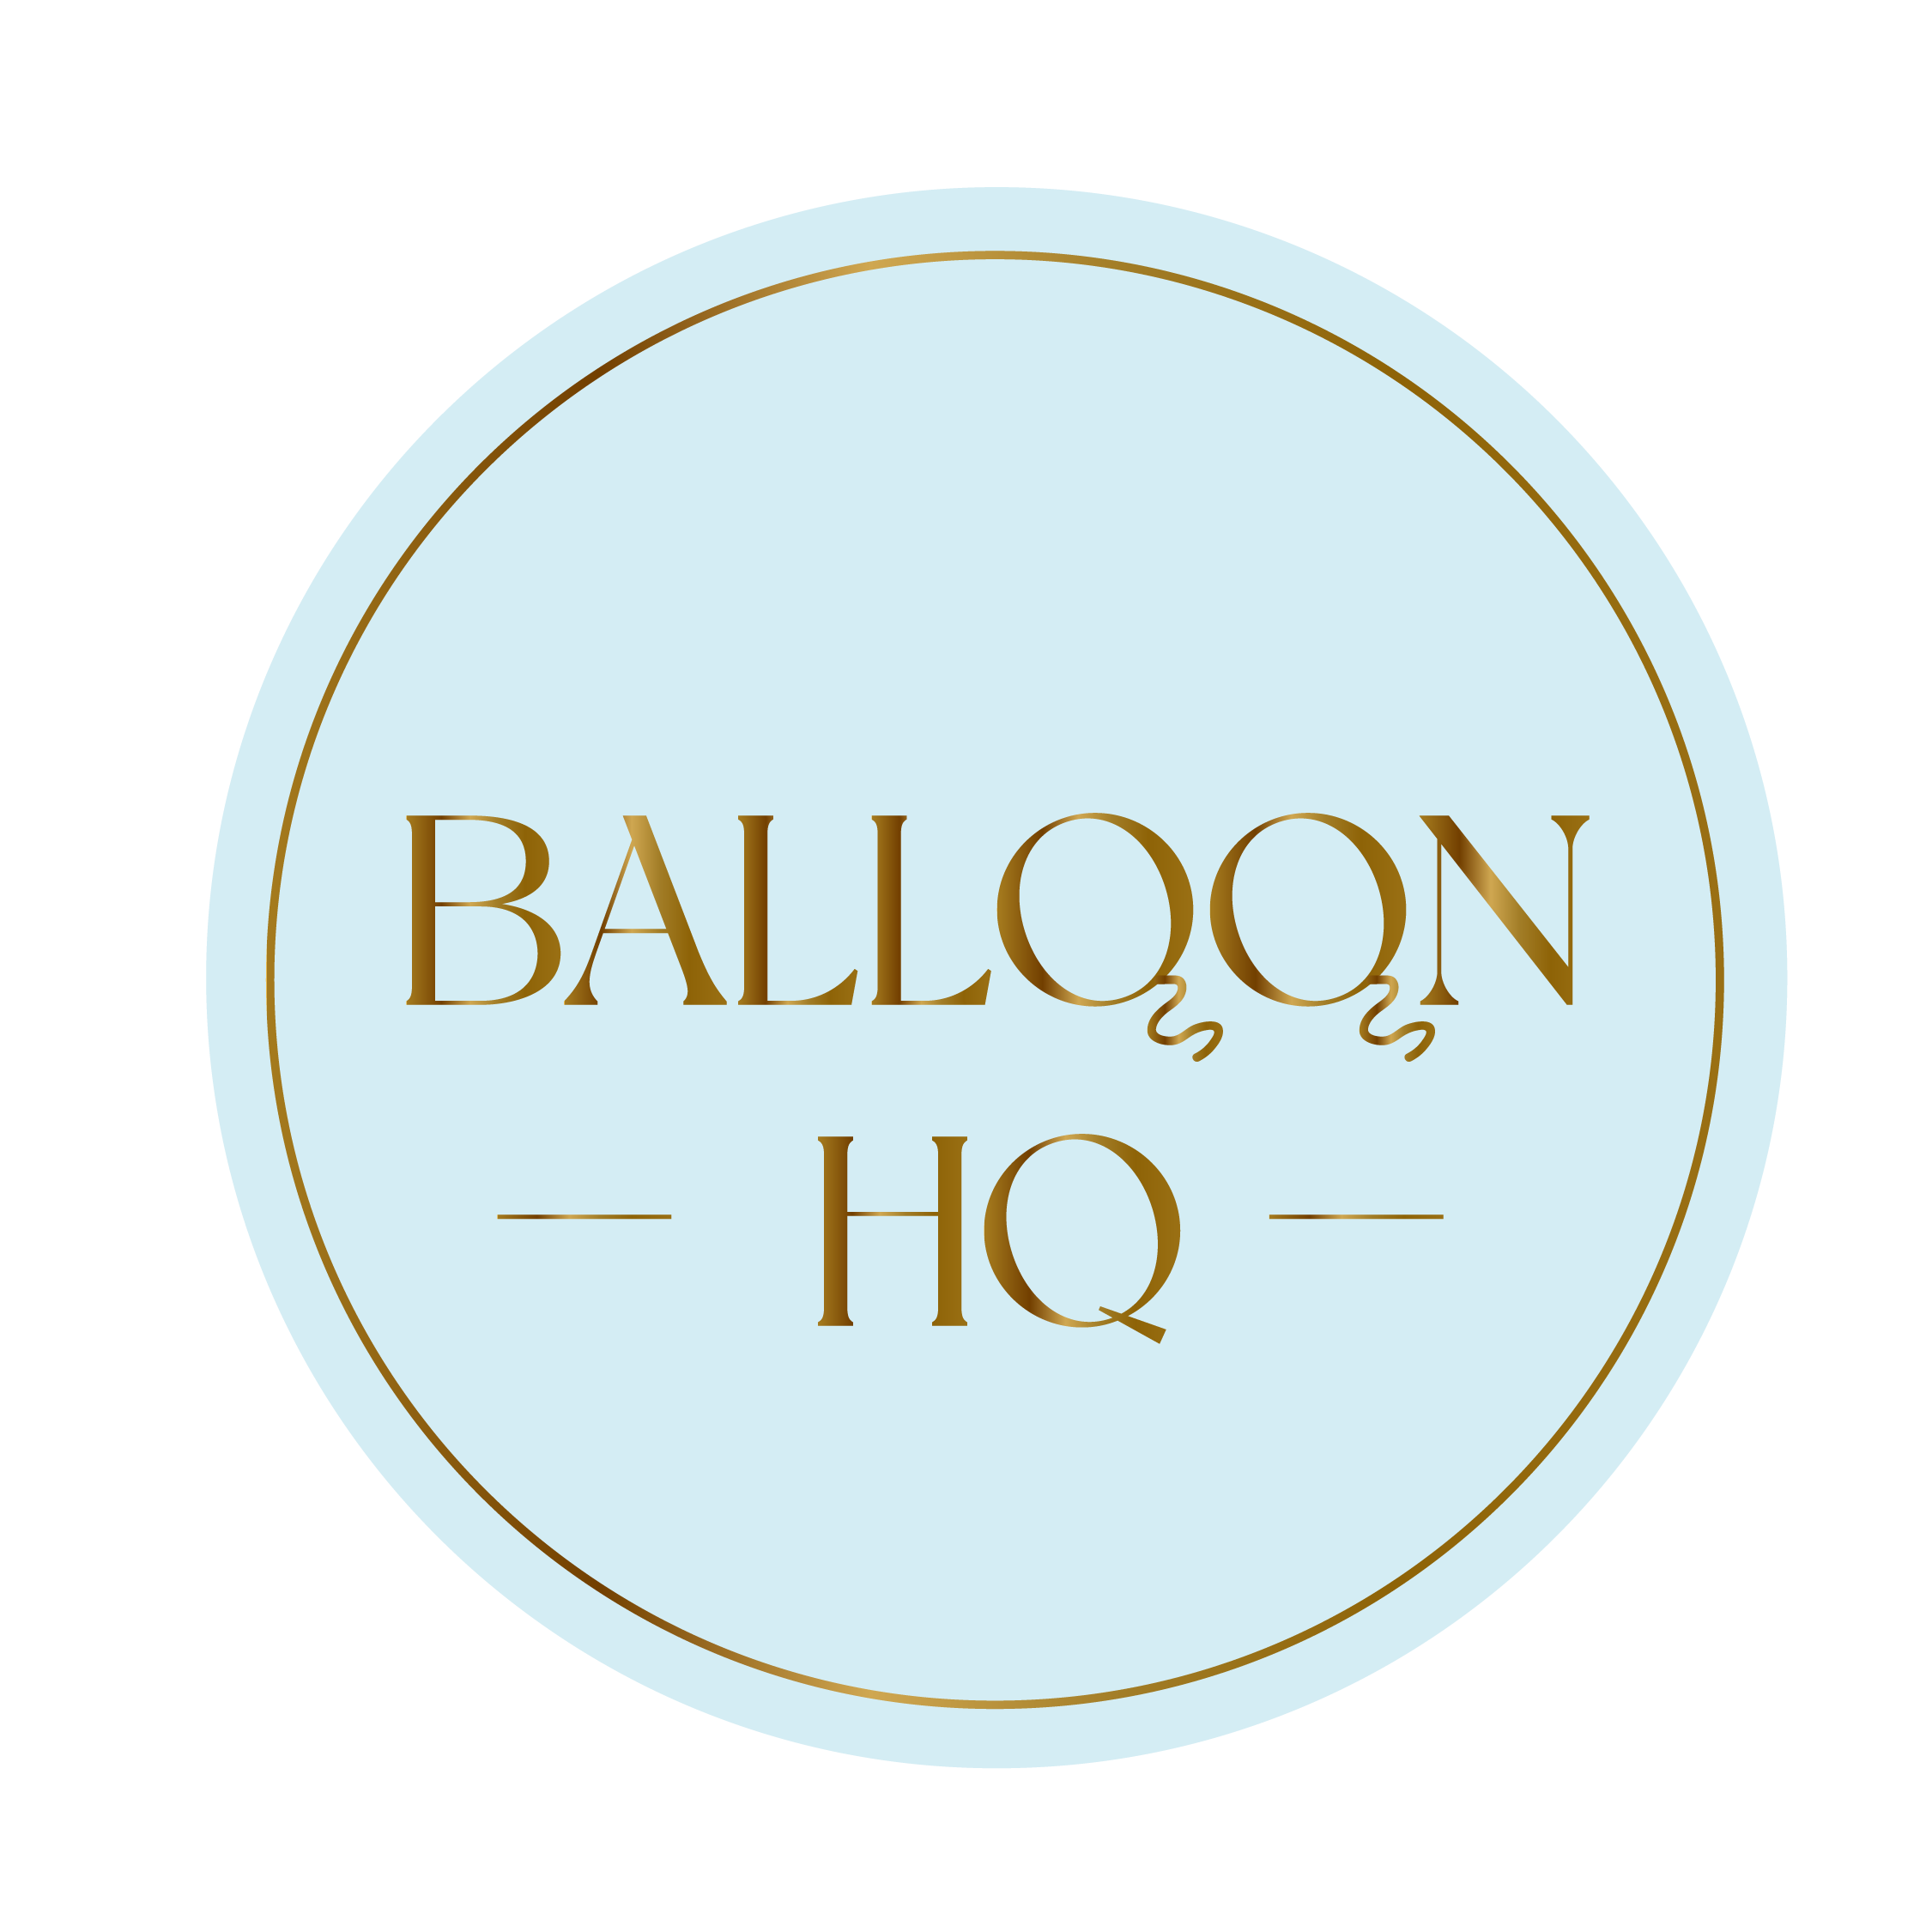 Balloon HQ Website